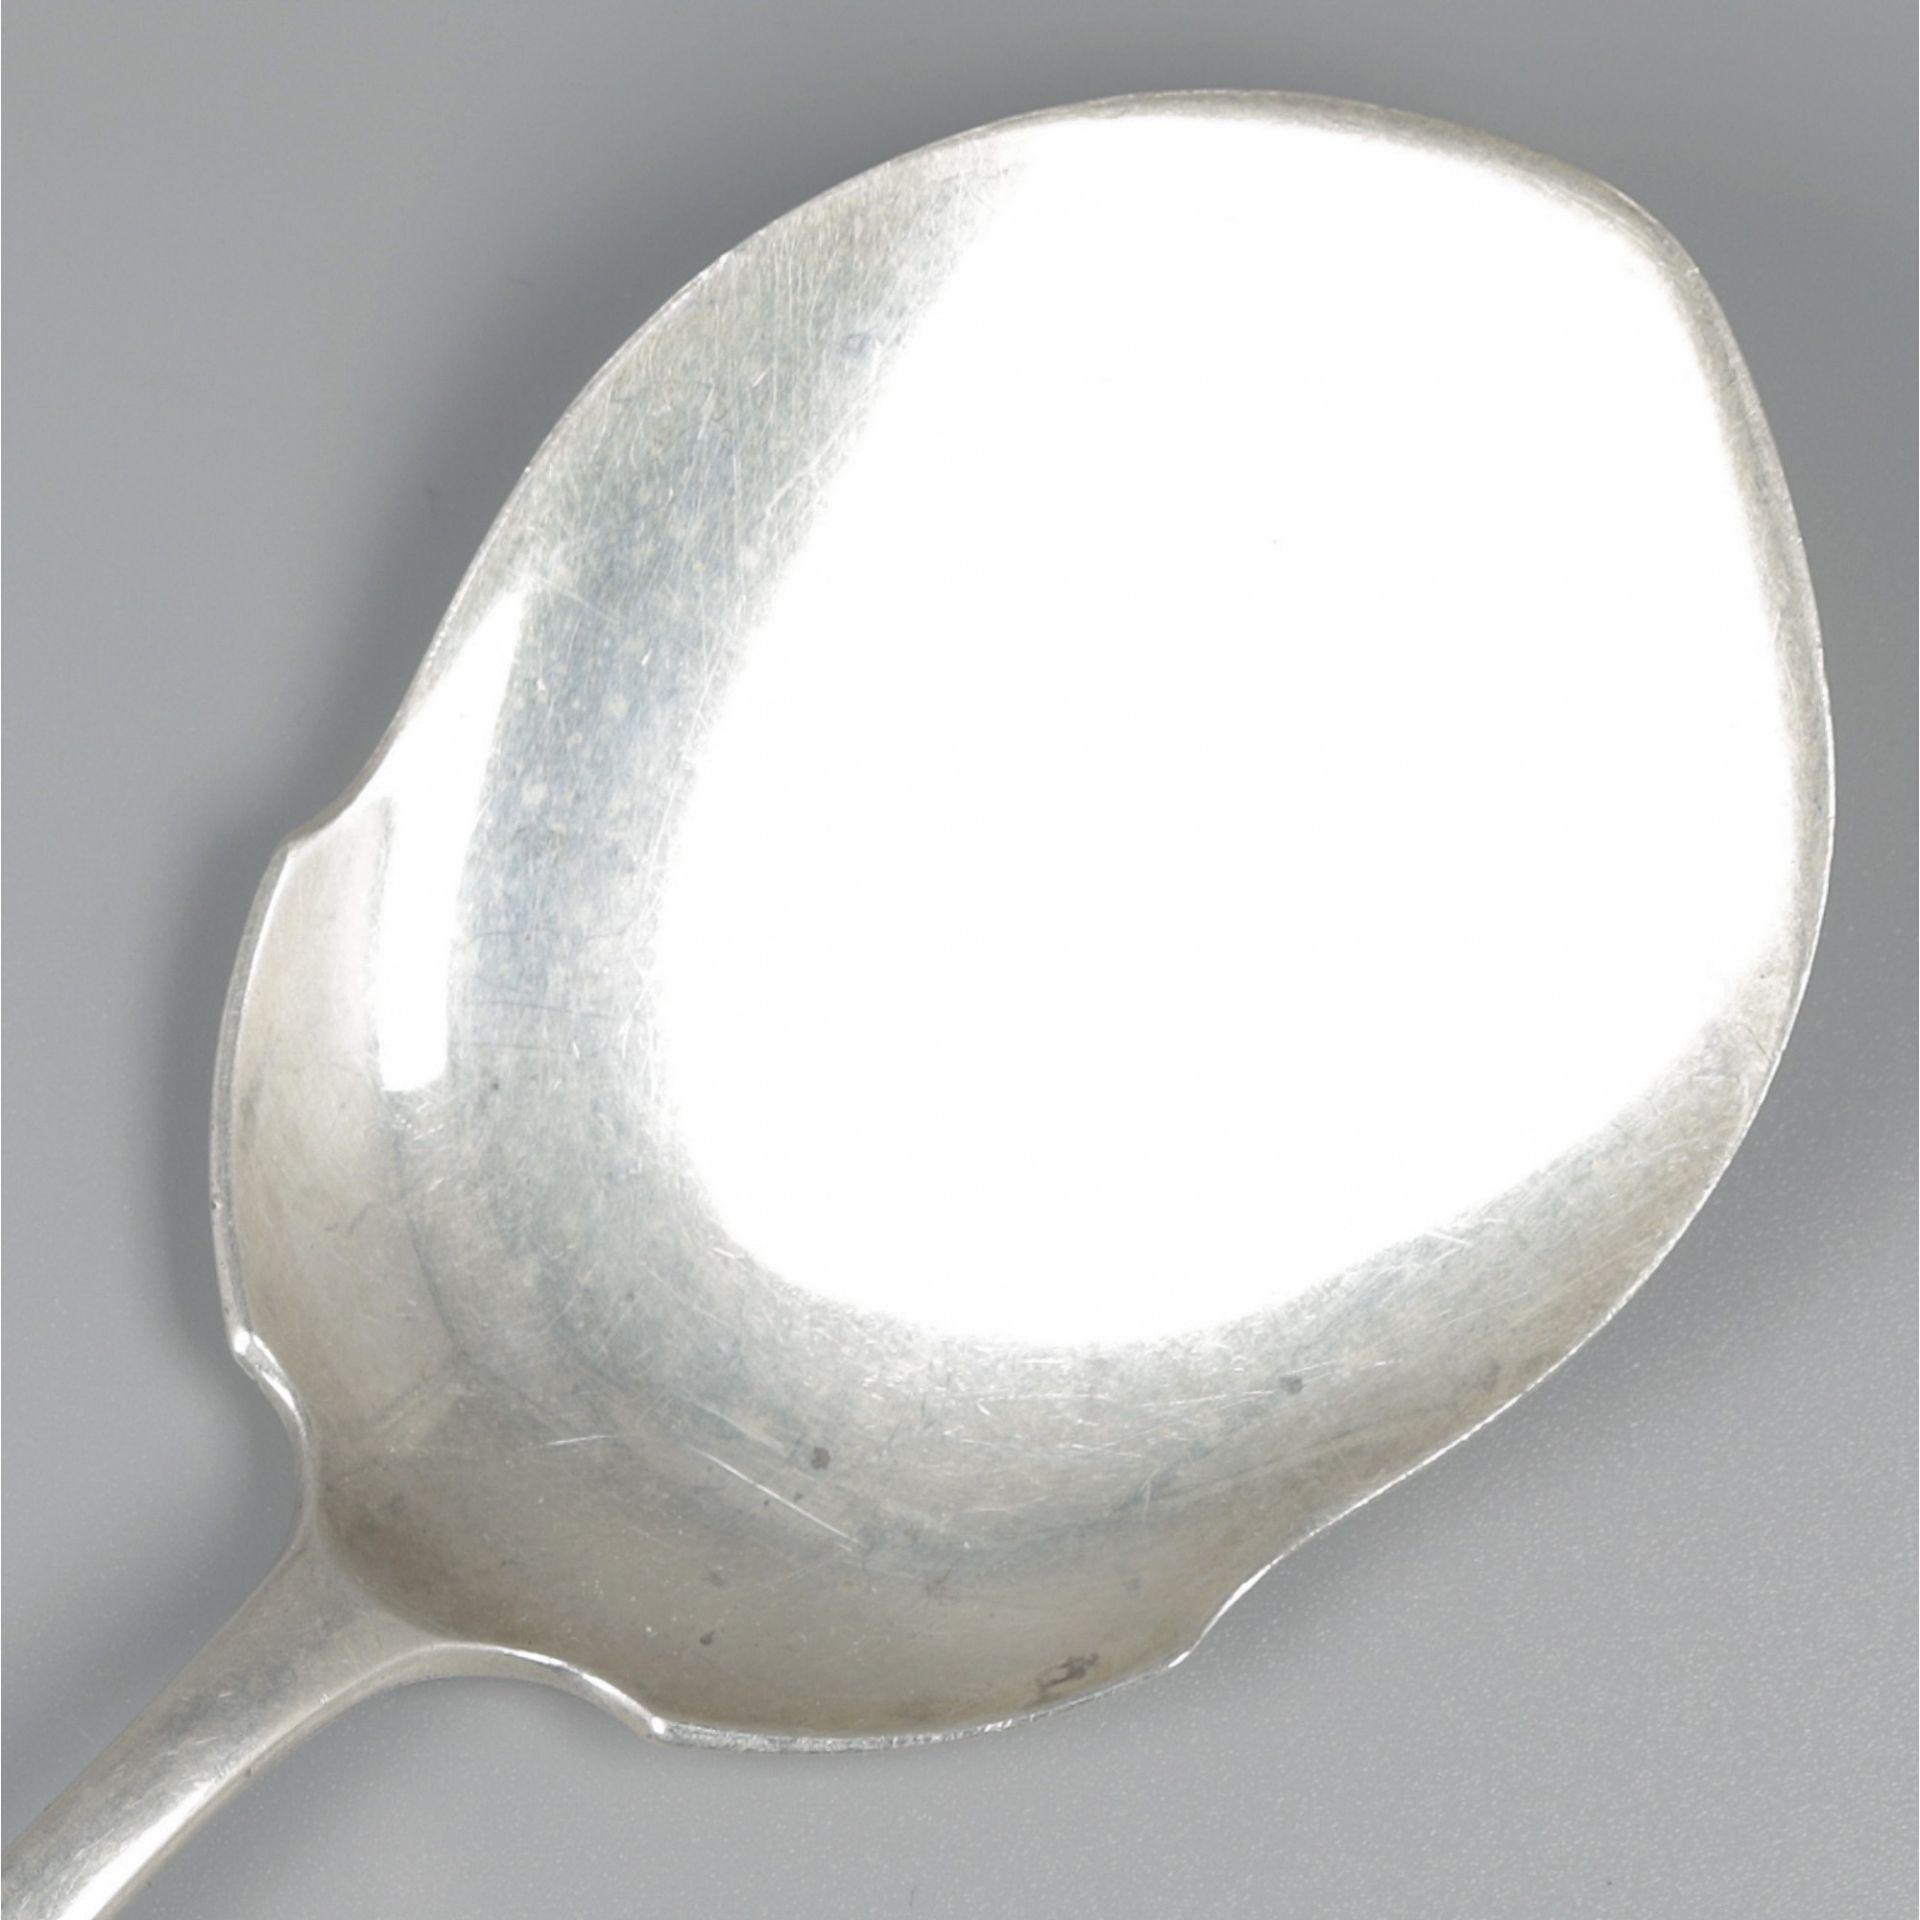 No reserve - Sweetmeat scoop / Pie scoop "Haags Lofje" silver. - Image 3 of 5